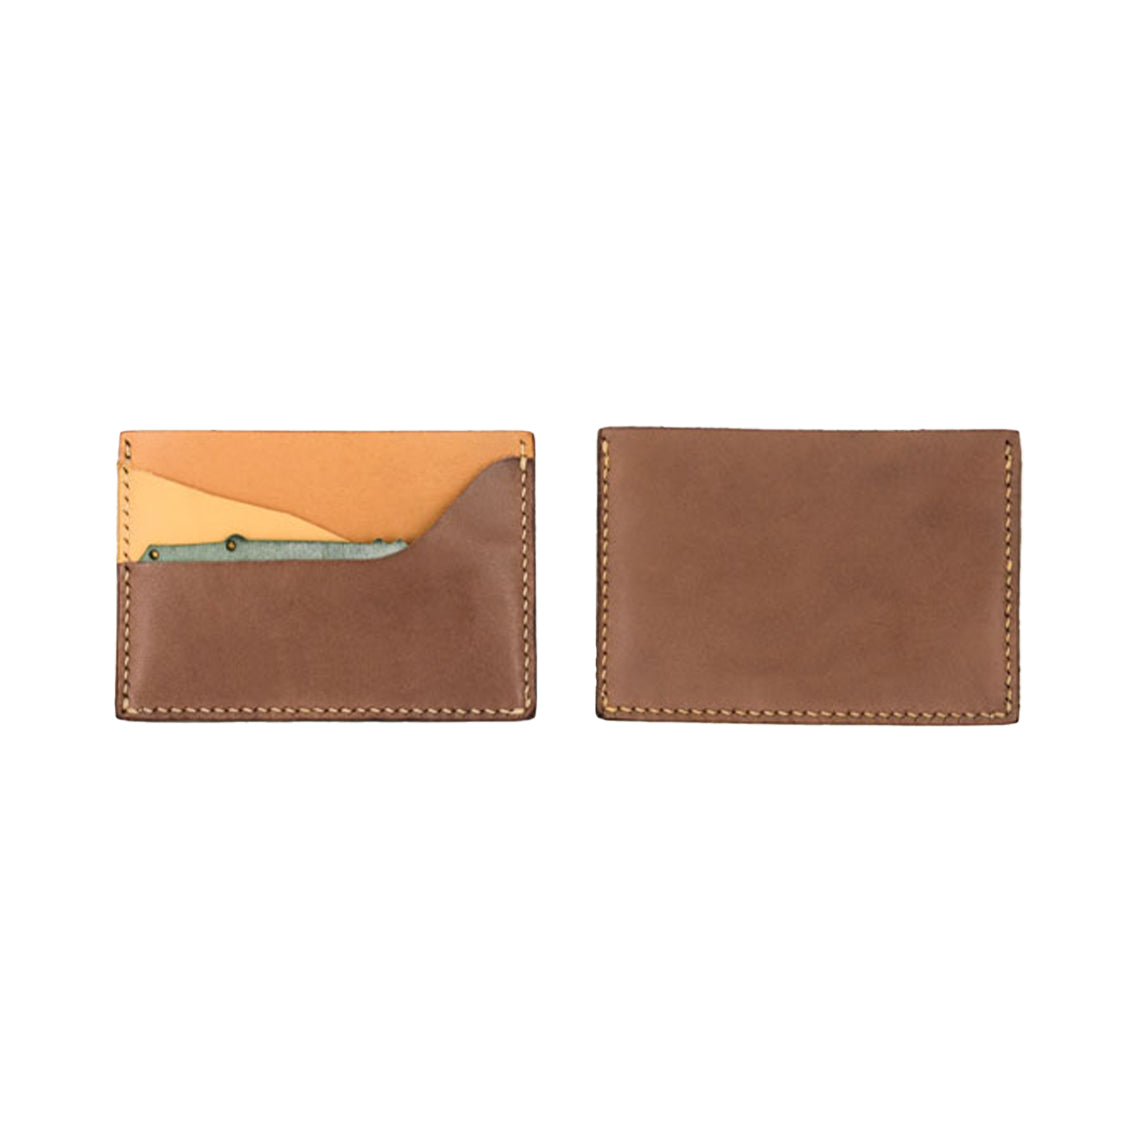 DIY leathercraft kit | Minimalist leather credit card holder kit | DIY leathercraft ideas